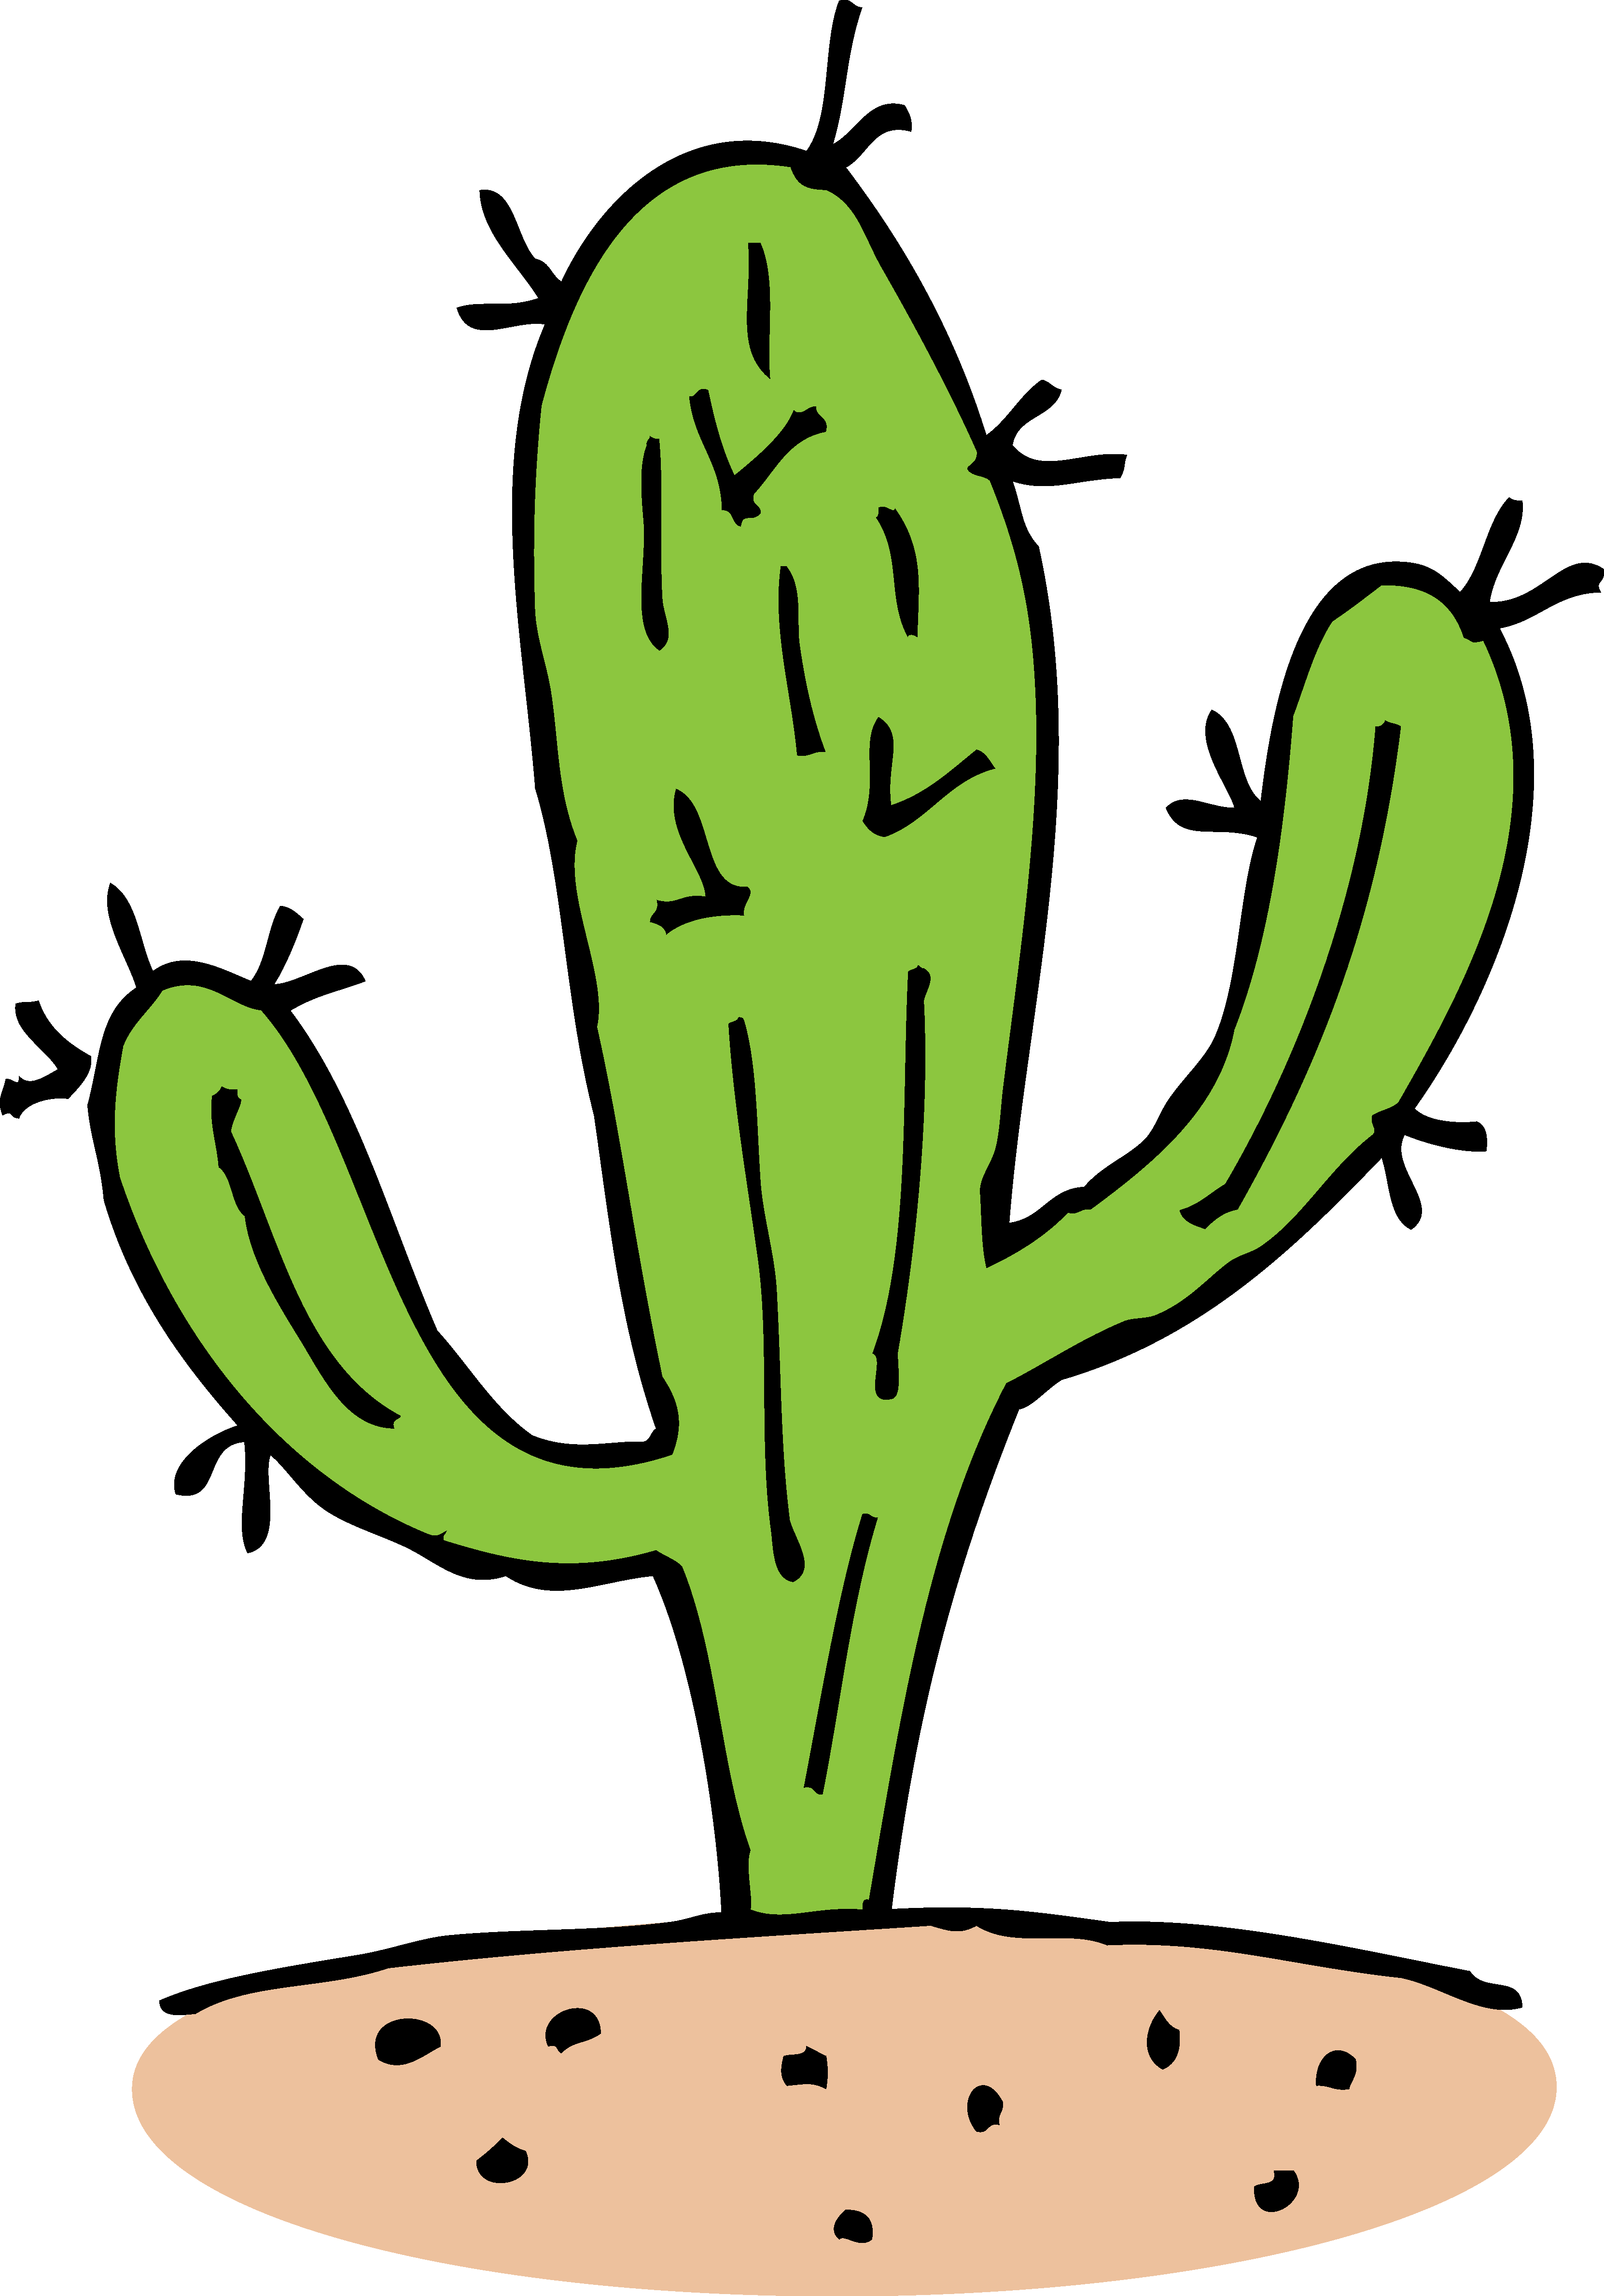 Clipart tree cactus. Jerry linus tech tips